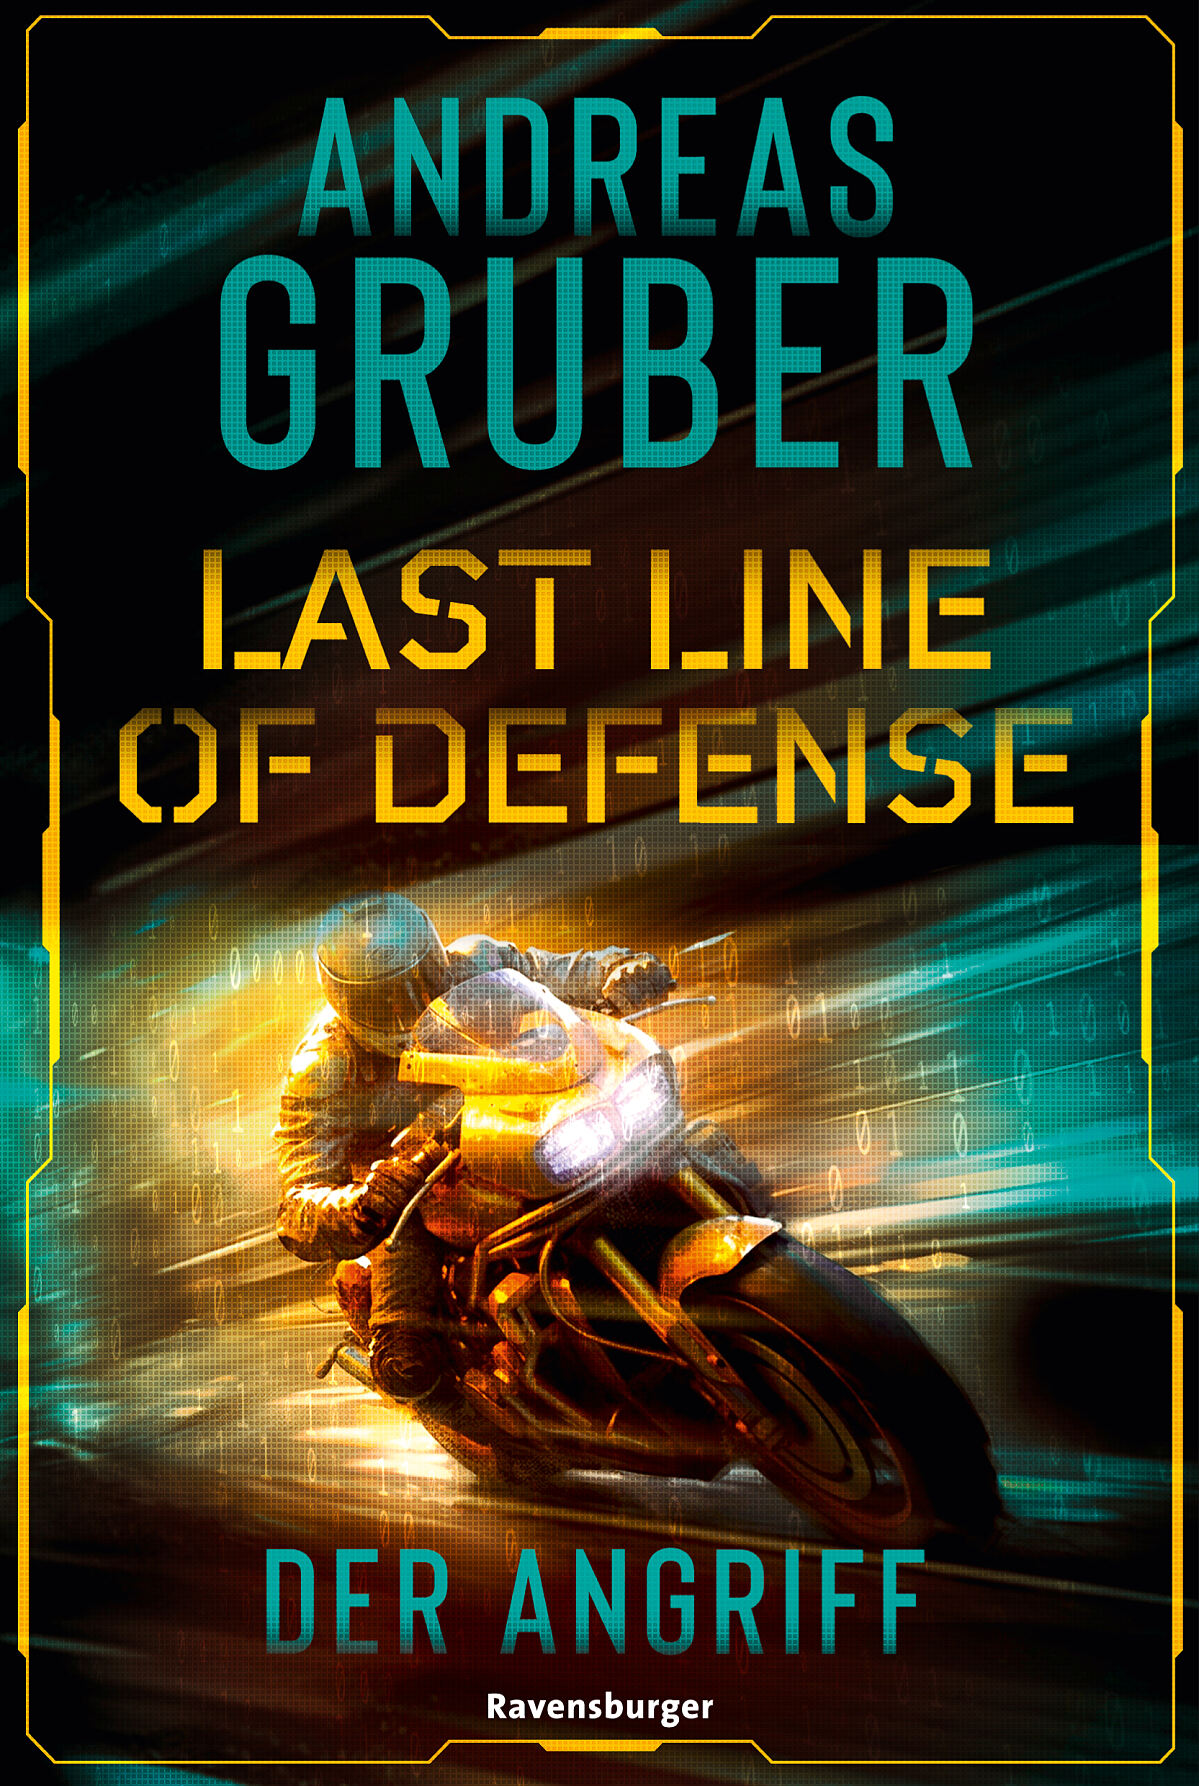 Gruber A - Last line of defense - Der Angriff